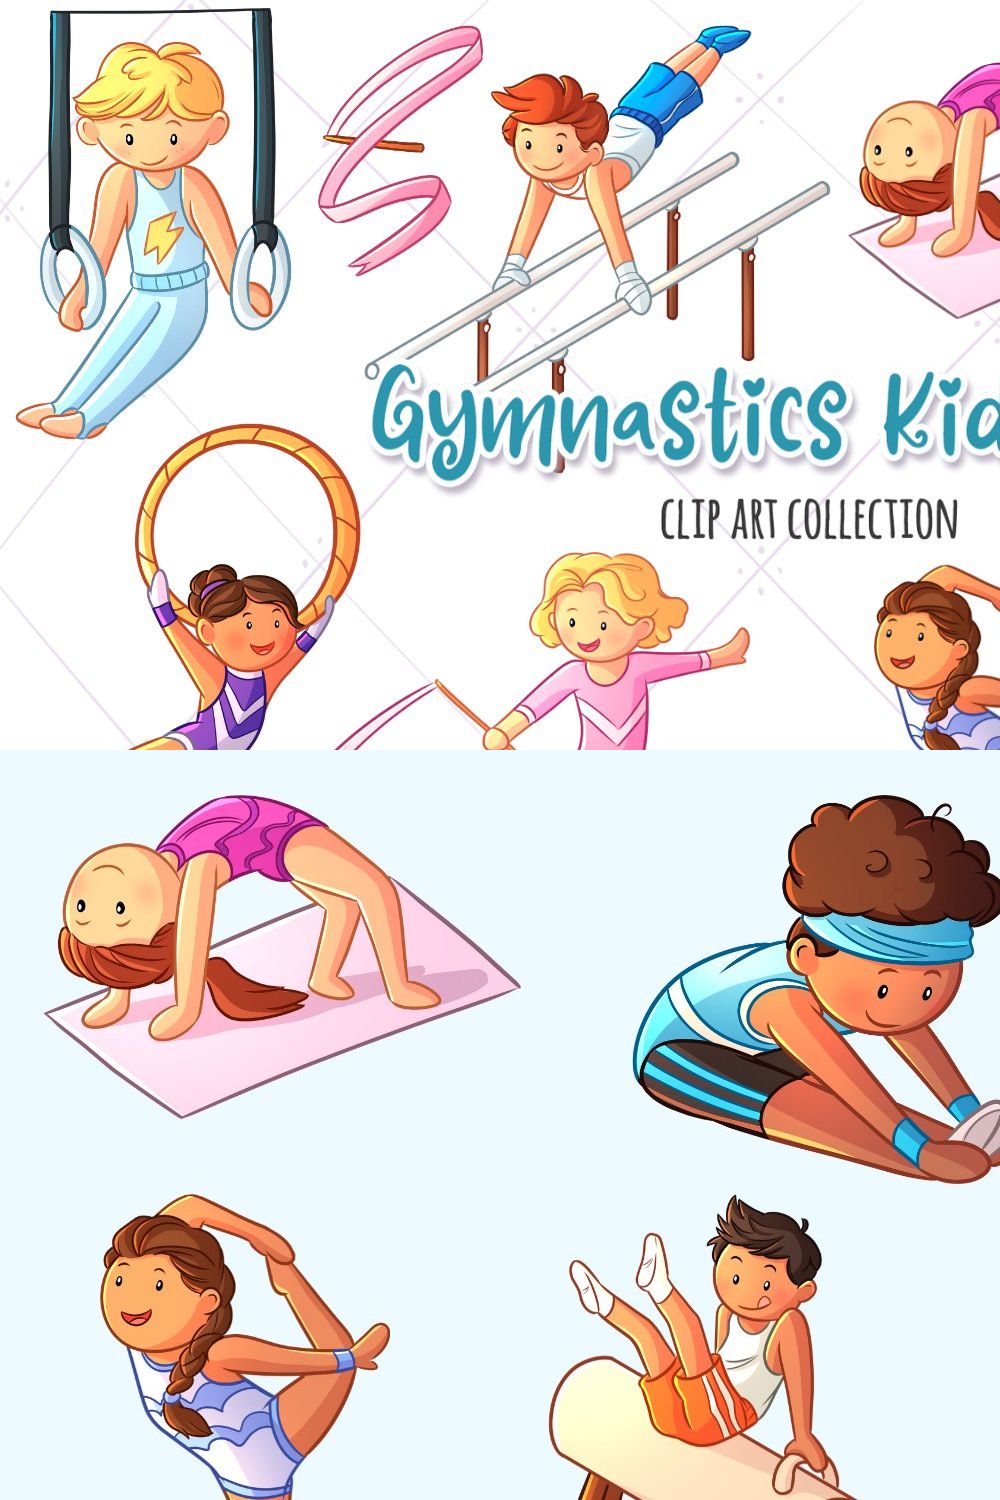 Gymnastics Kids Clip Art Collection pinterest preview image.